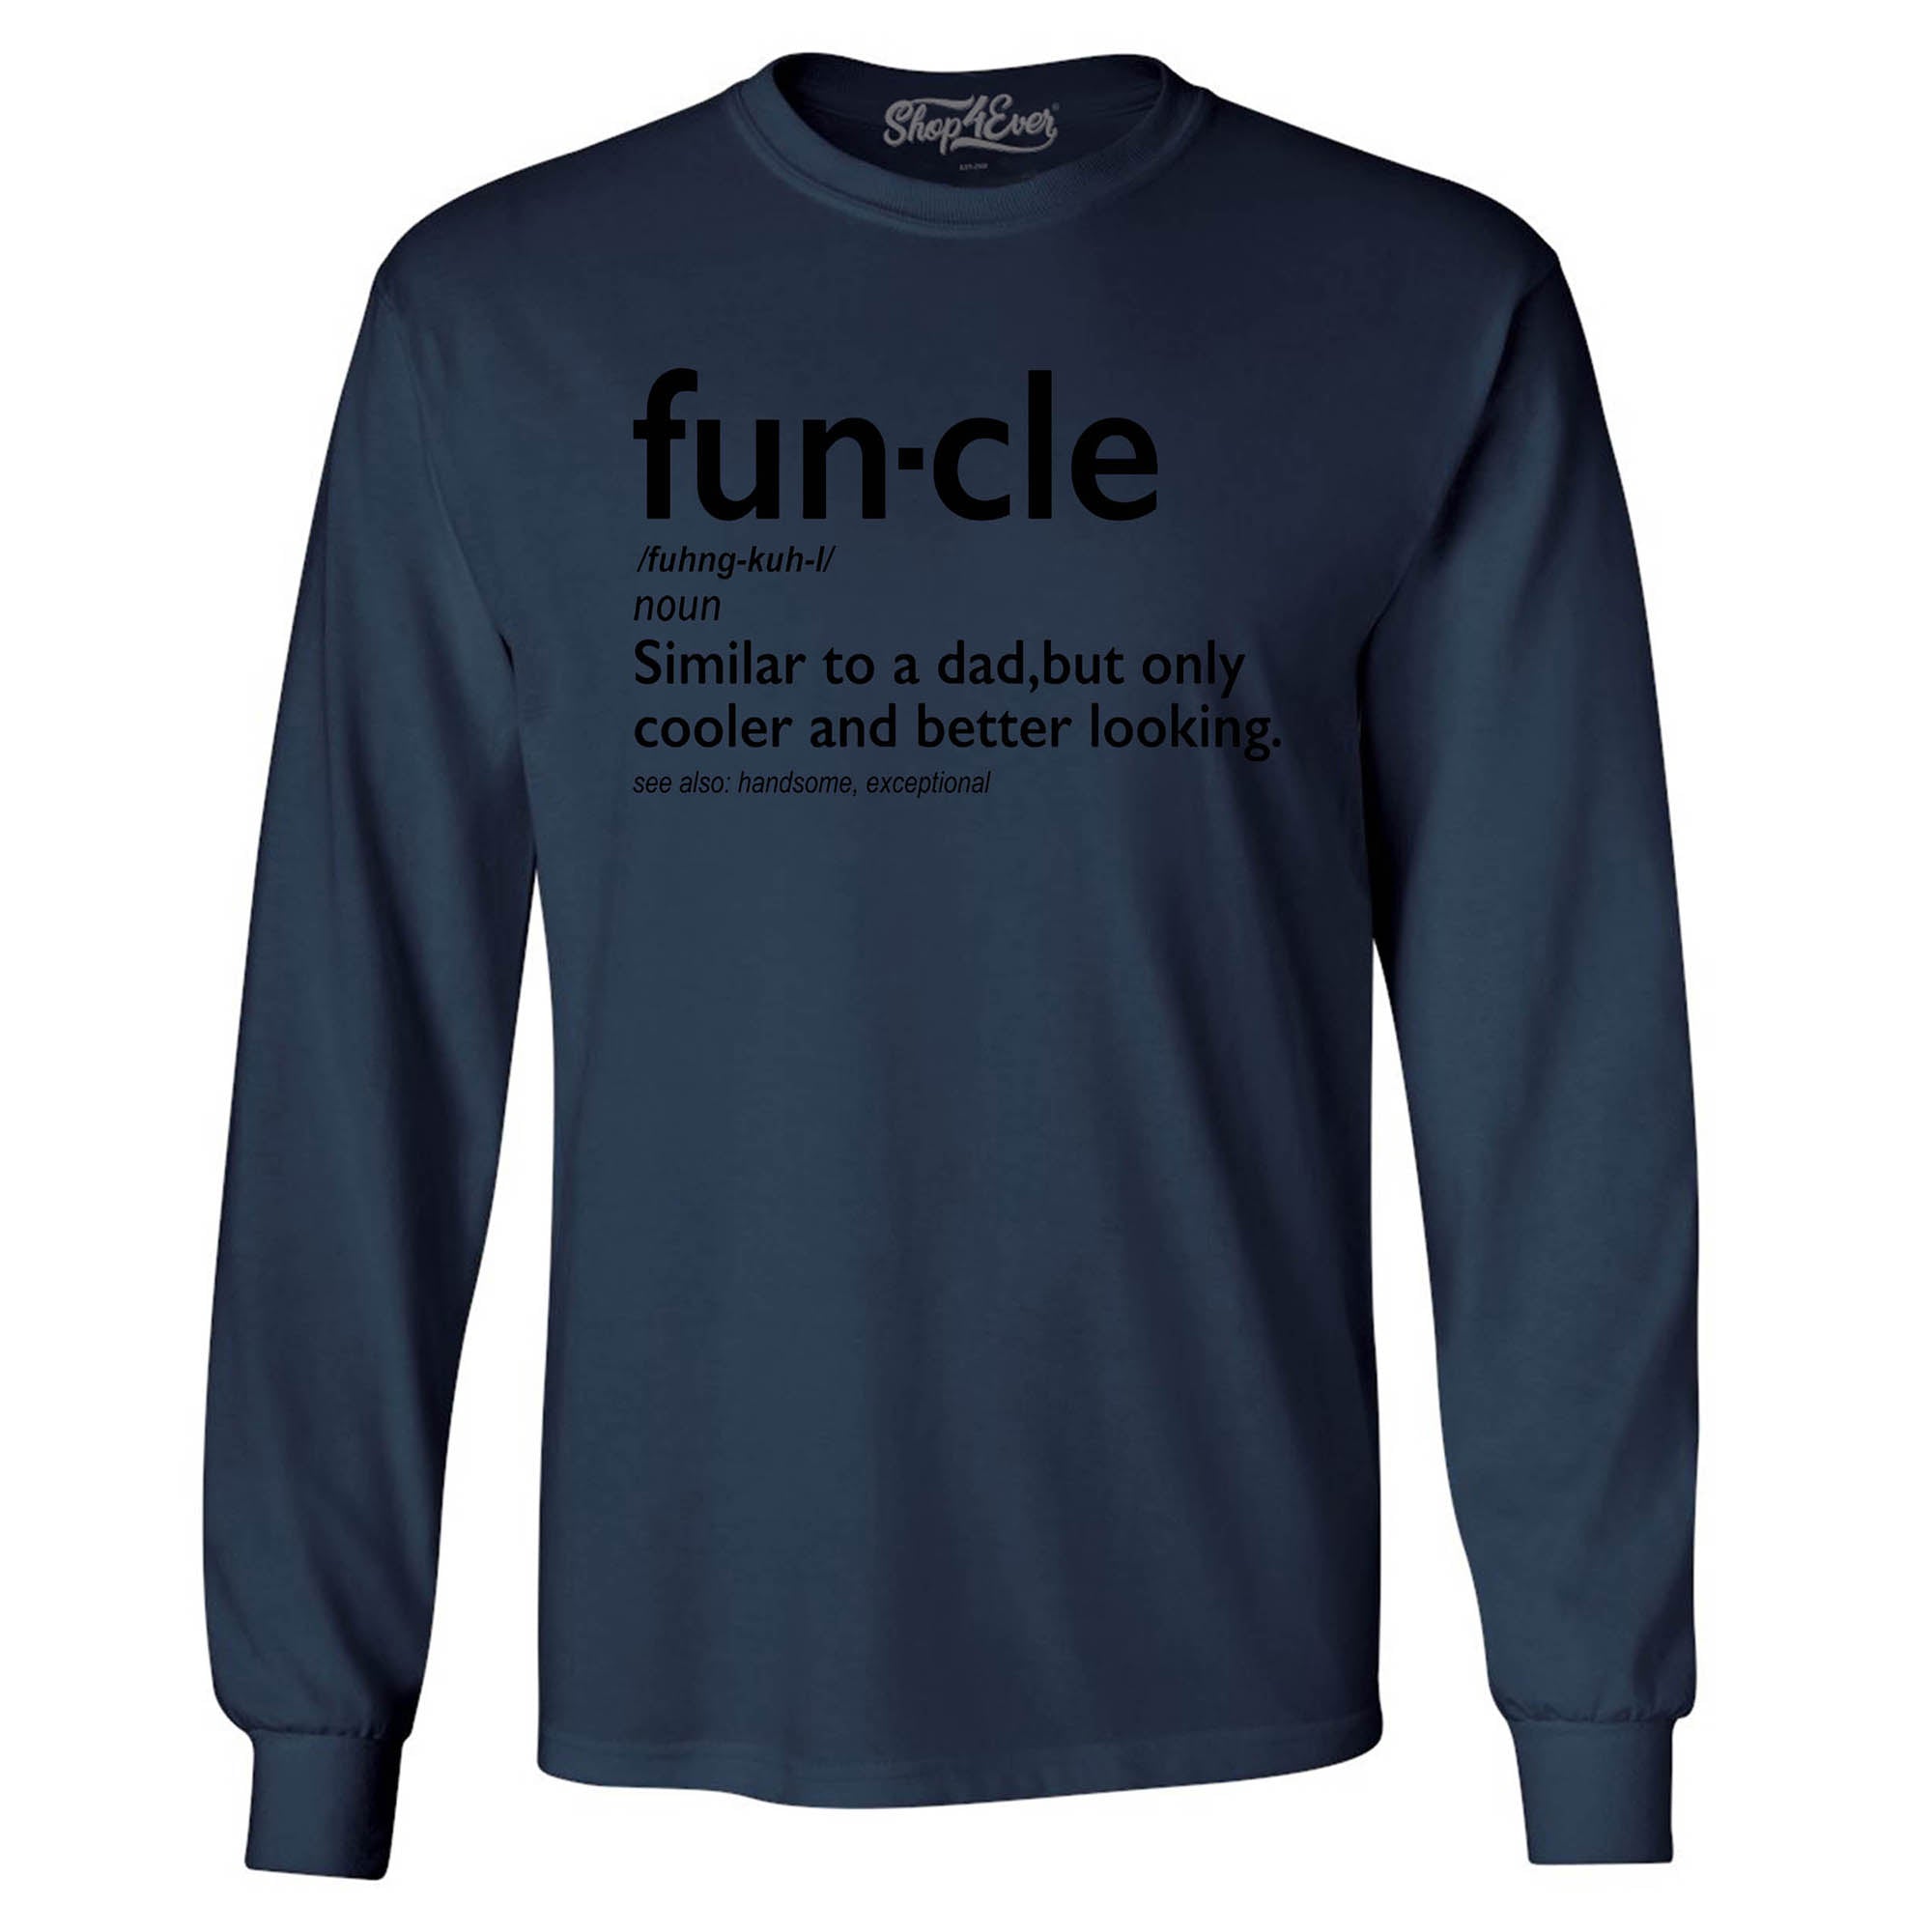 Fun-cle Long Sleeve Shirt Uncle Shirts